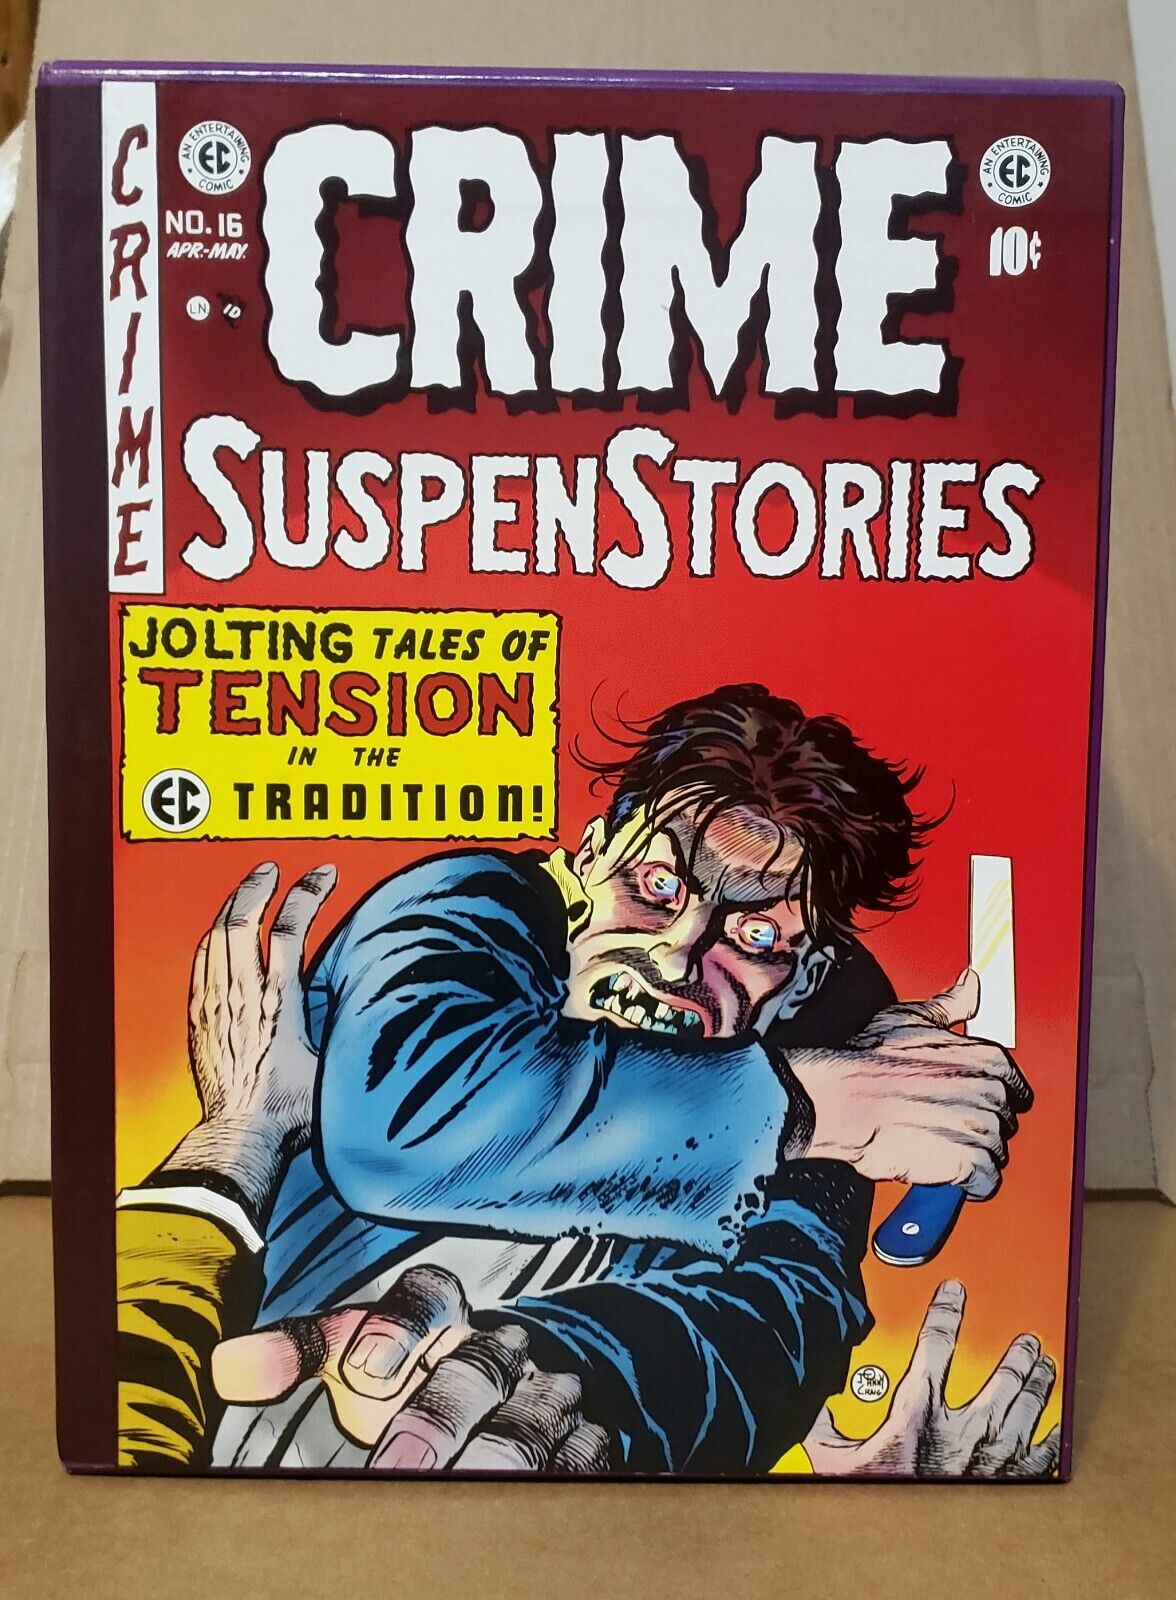 The Complete EC Crime SuspenStories Slipcase Hardcover set - Russ Cochran 1983